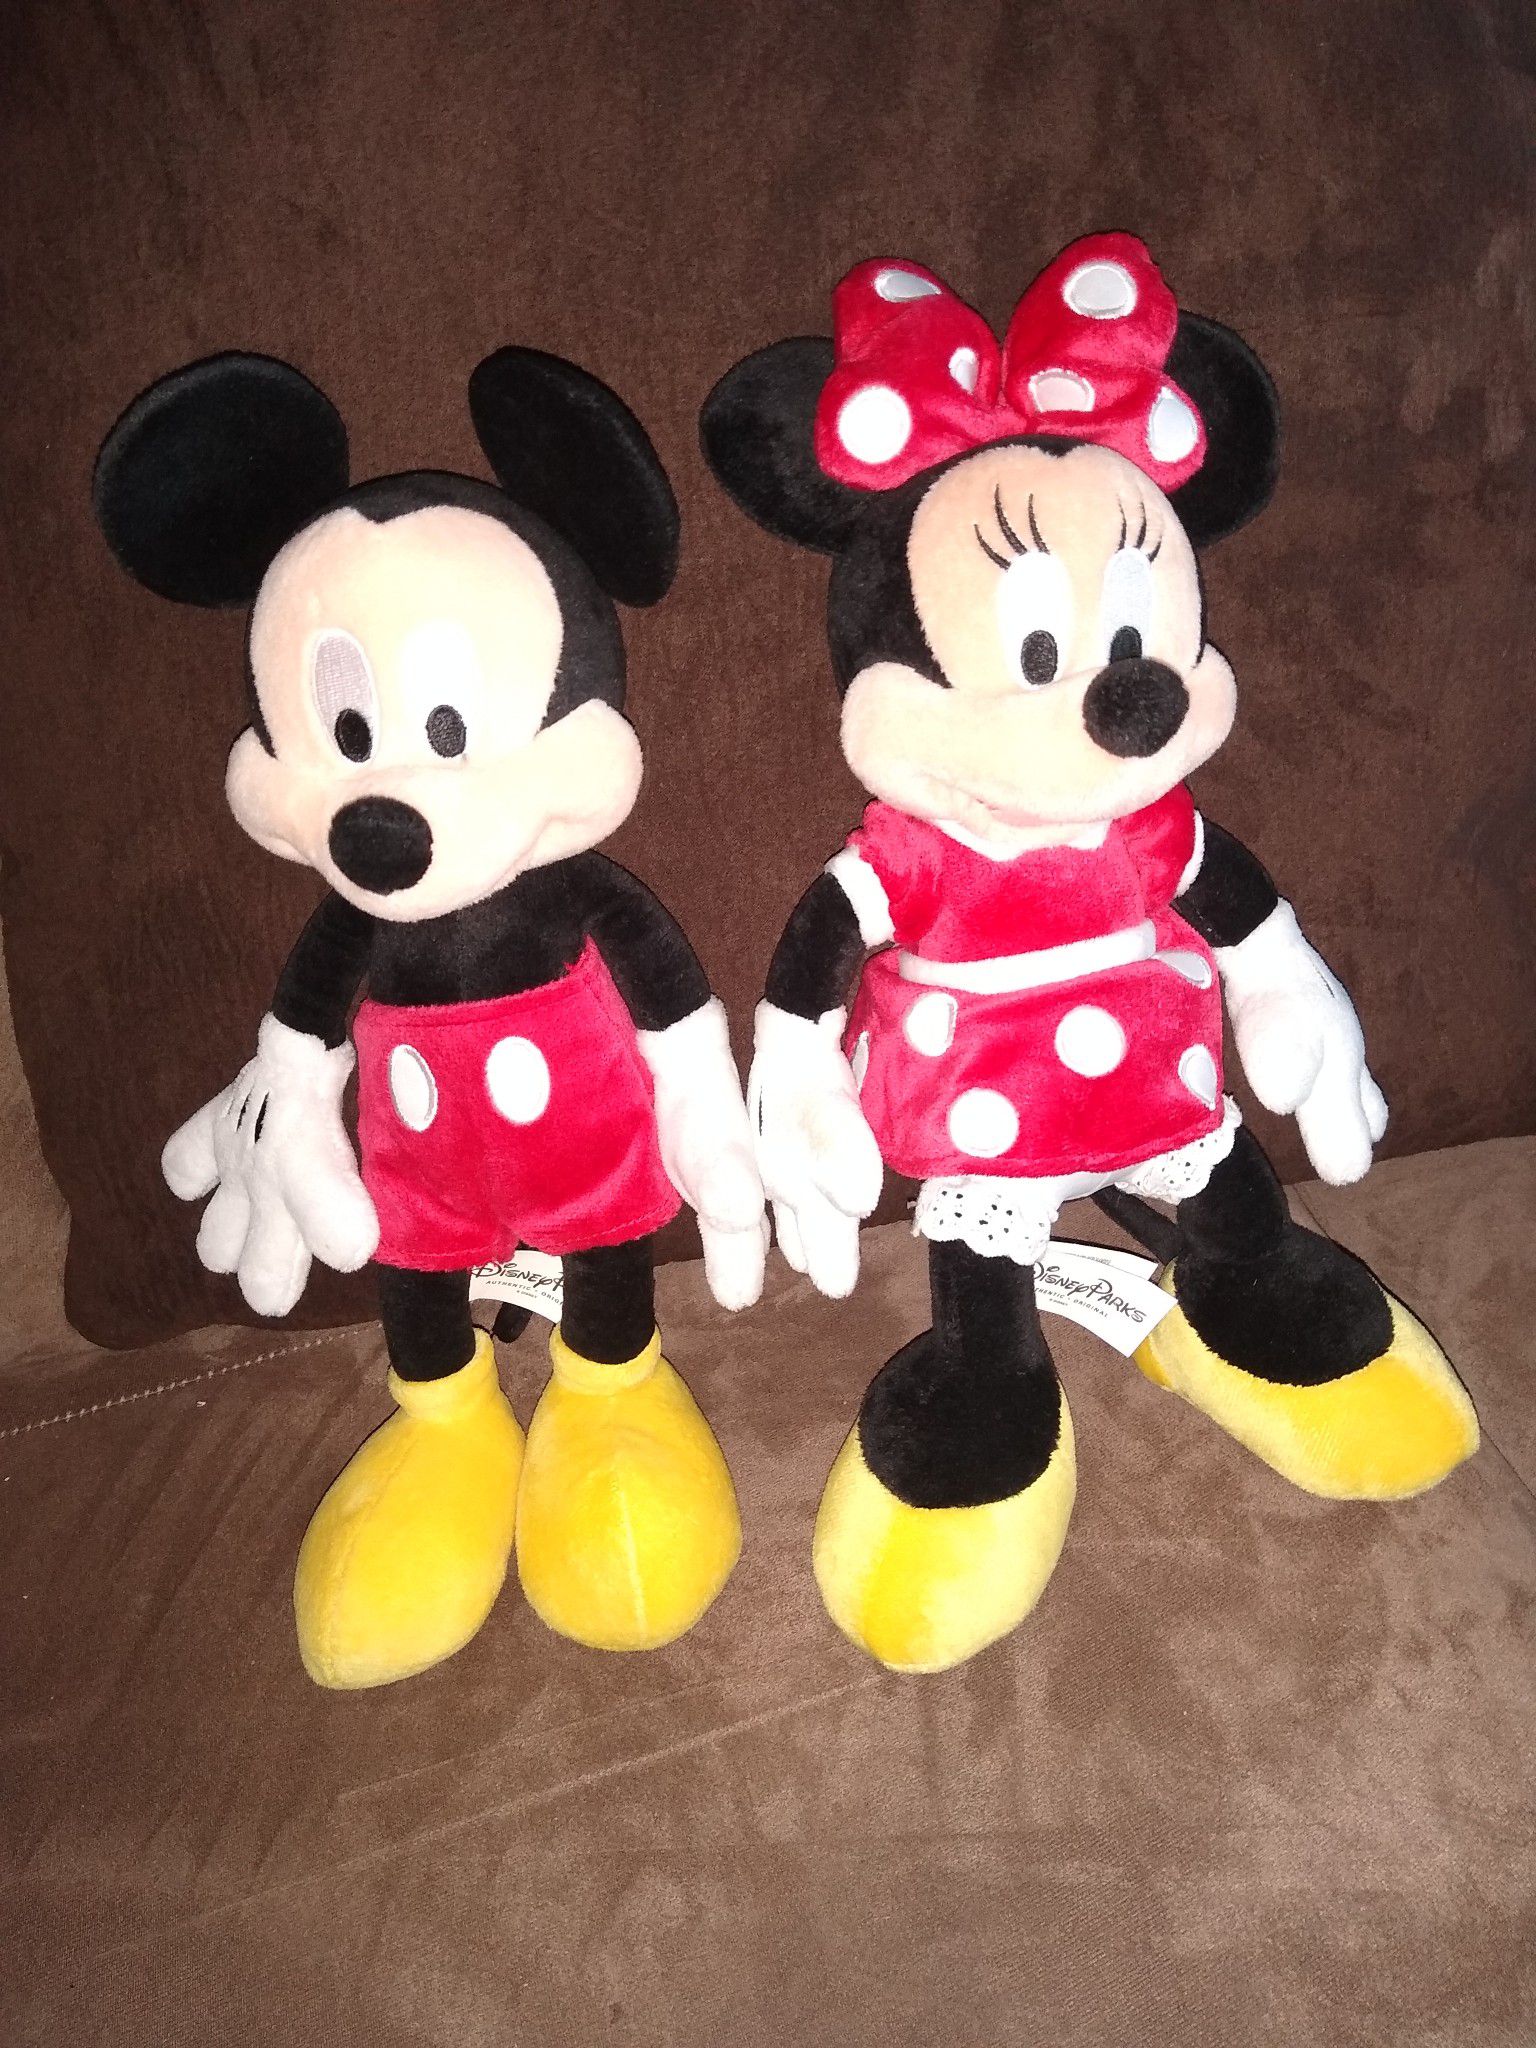 Mickey and Minnie from Disneyland